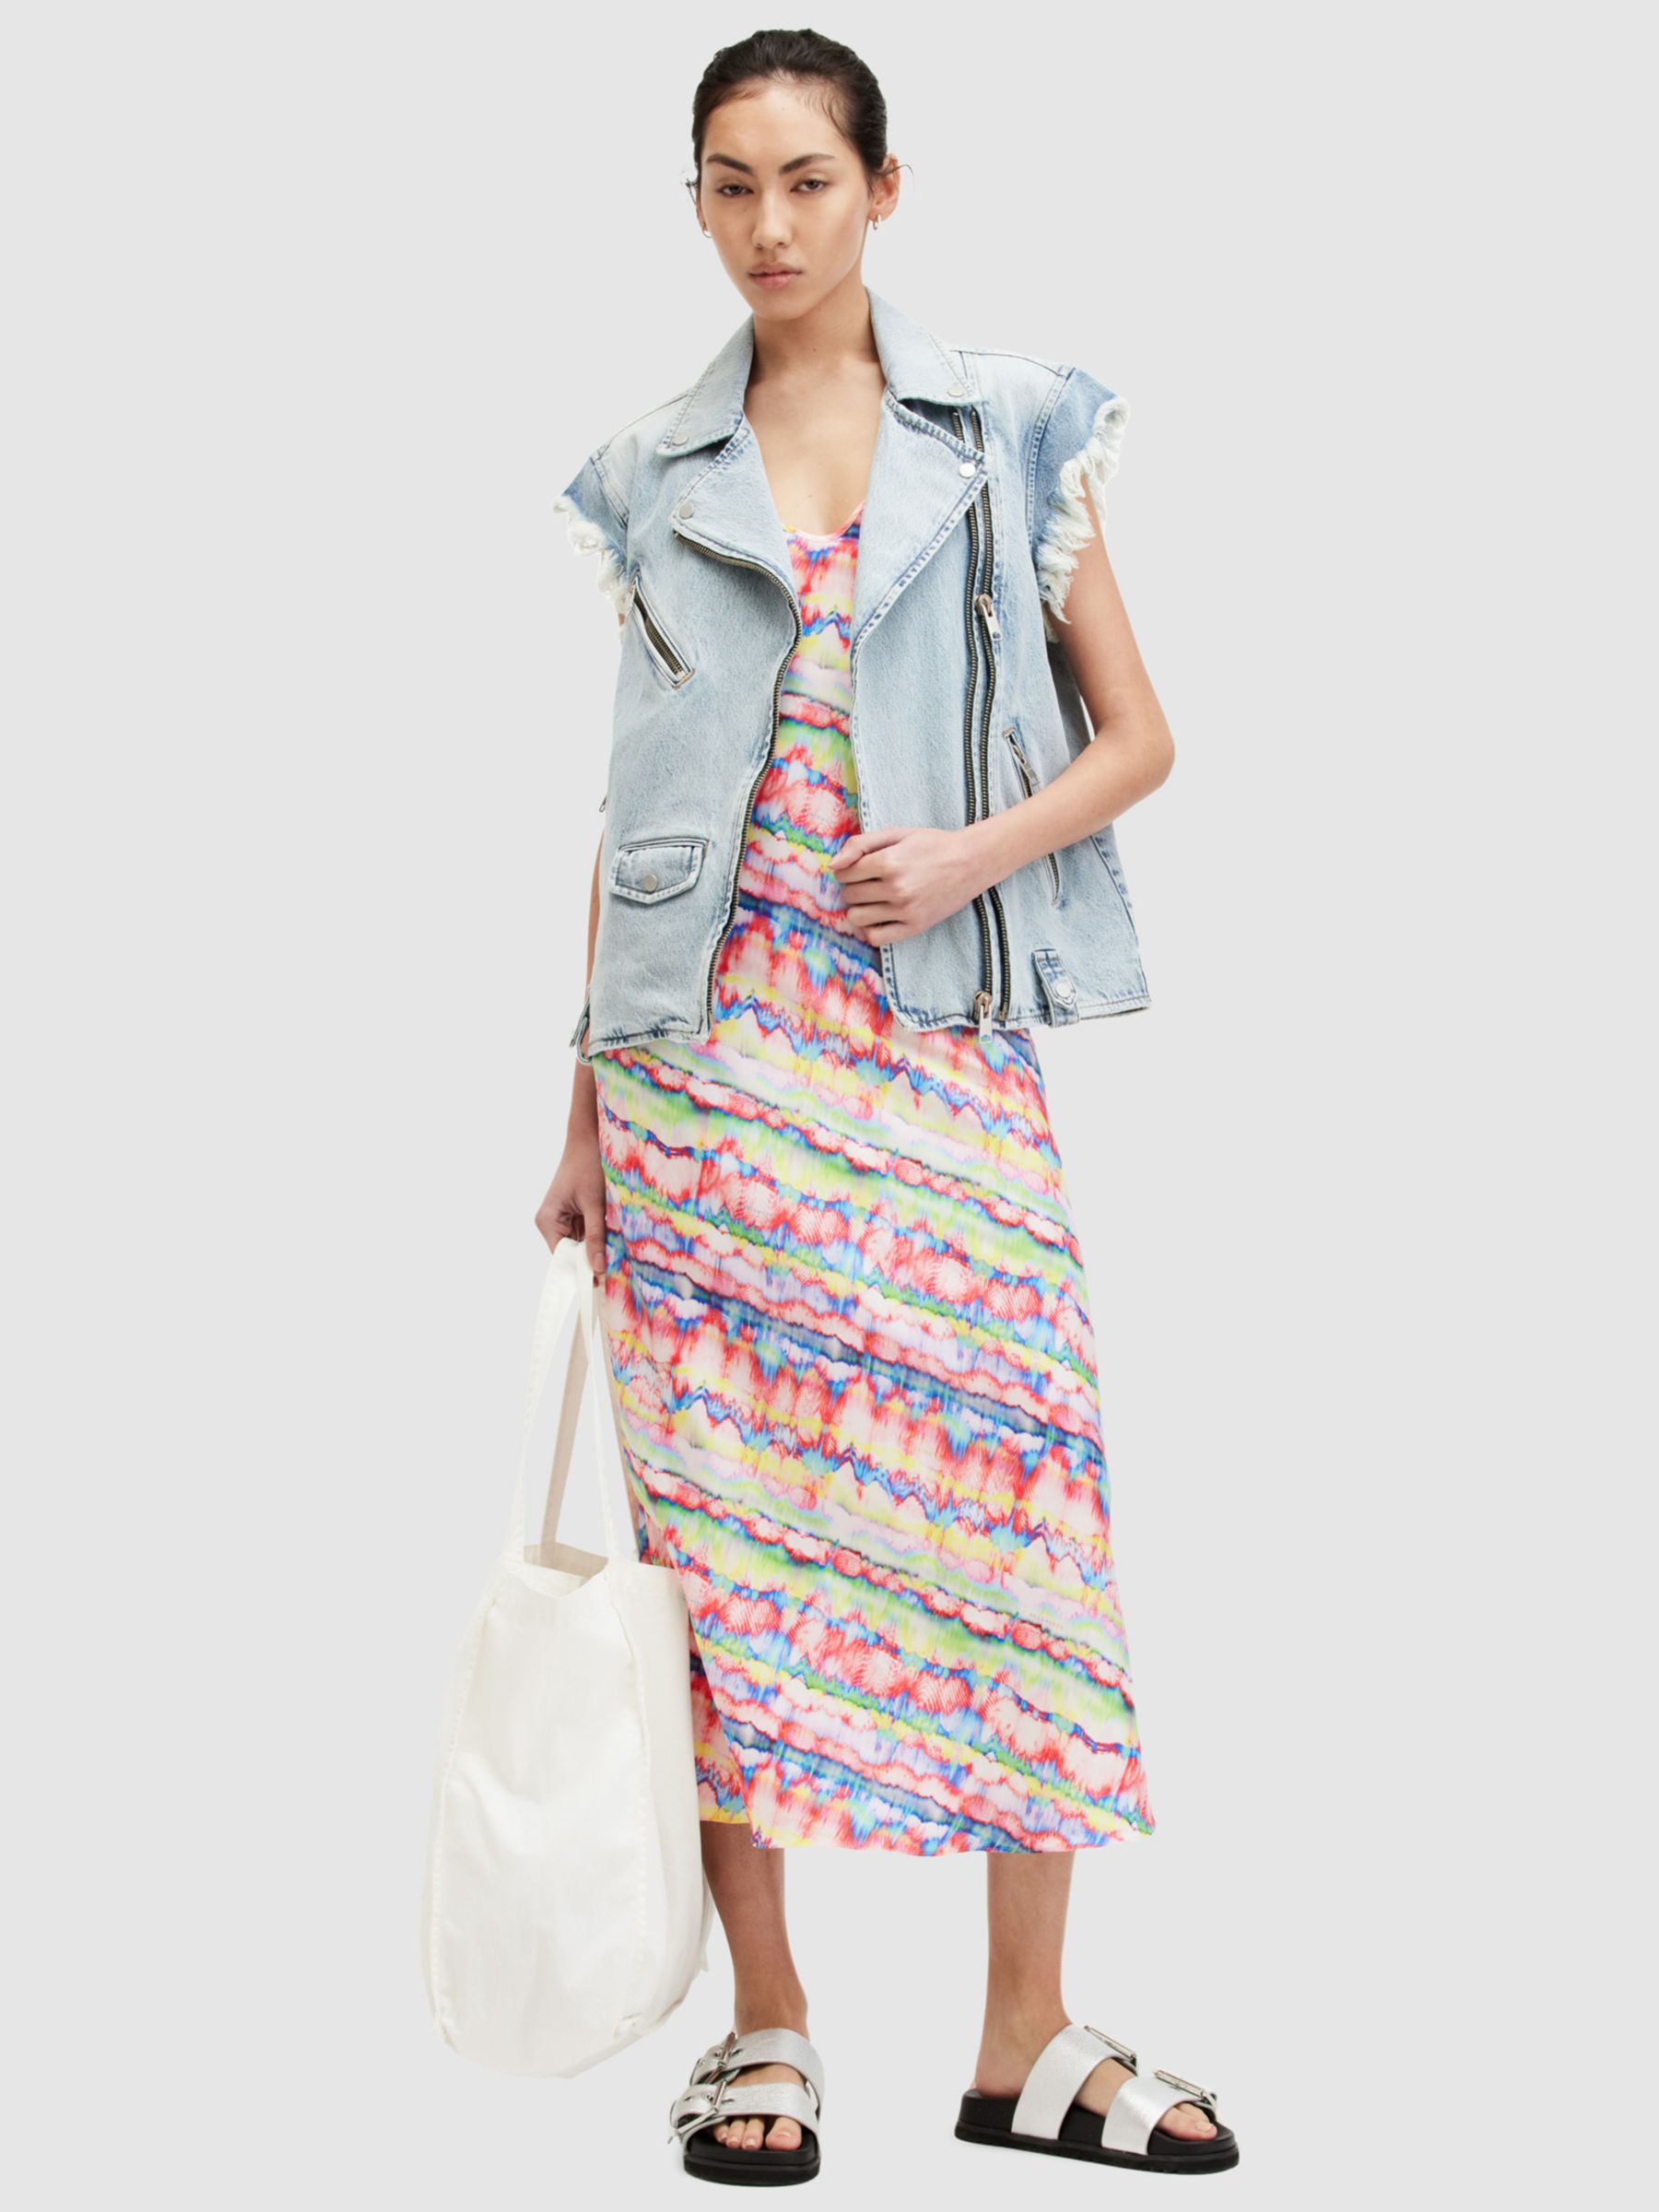 AllSaints Bryony Melissa Abstract Print Midi Slip Dress, Multi, 10